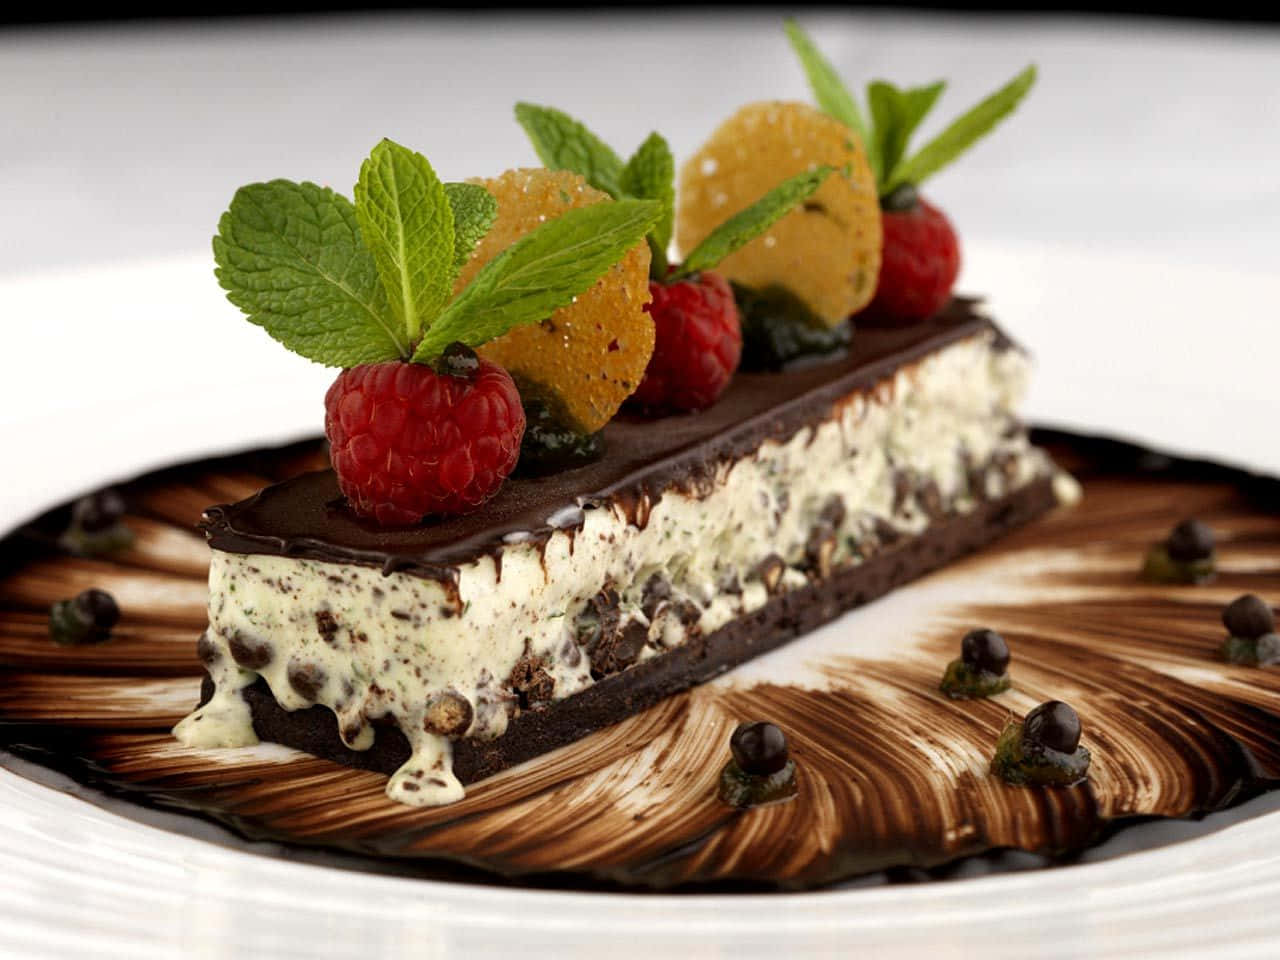 Rich and creamy indulgence - Dessert